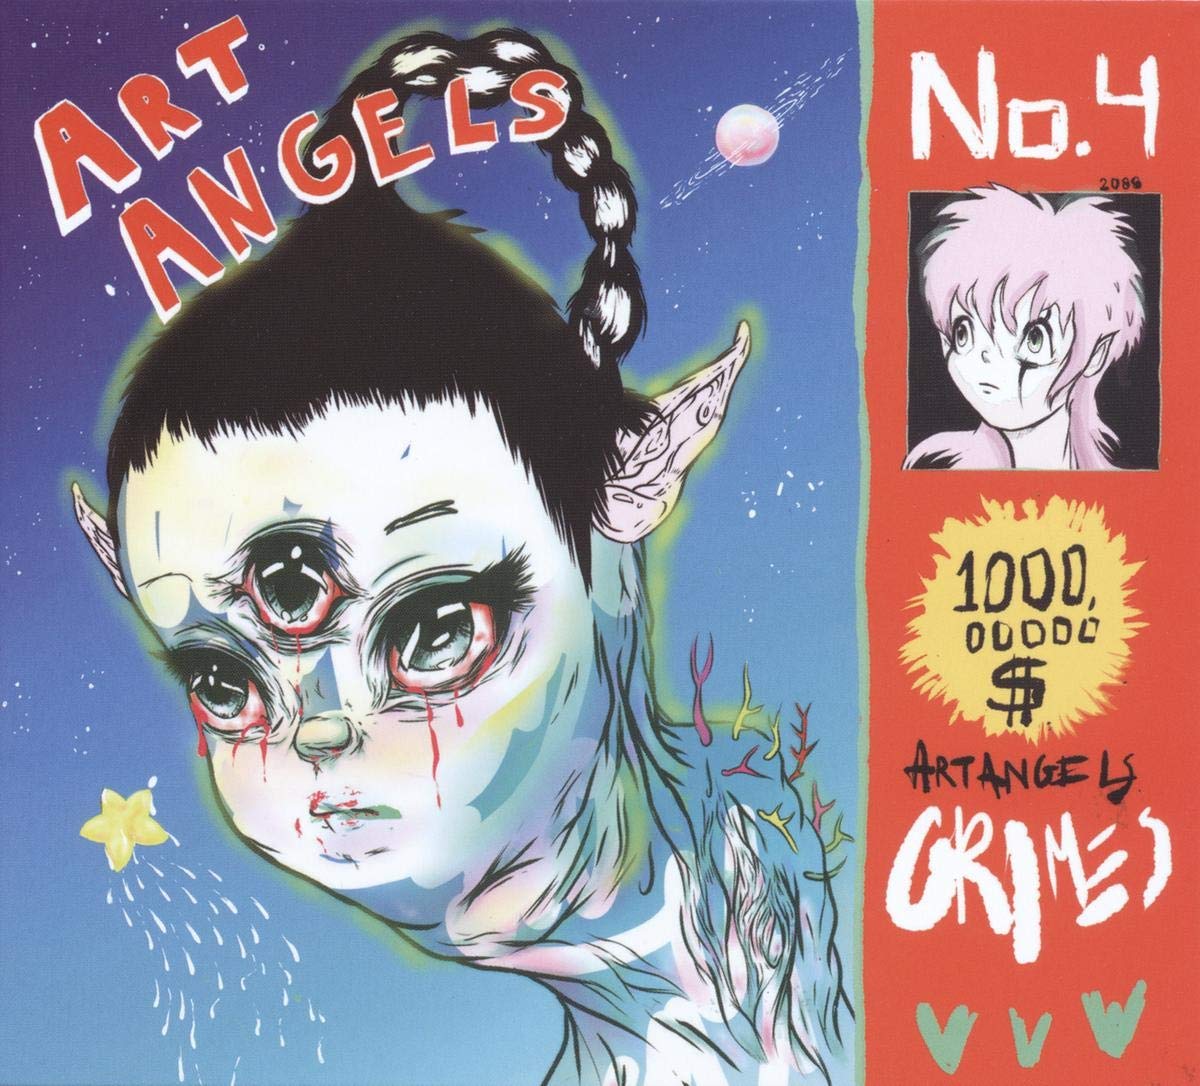 Grimes - Art Angels - Third Eye